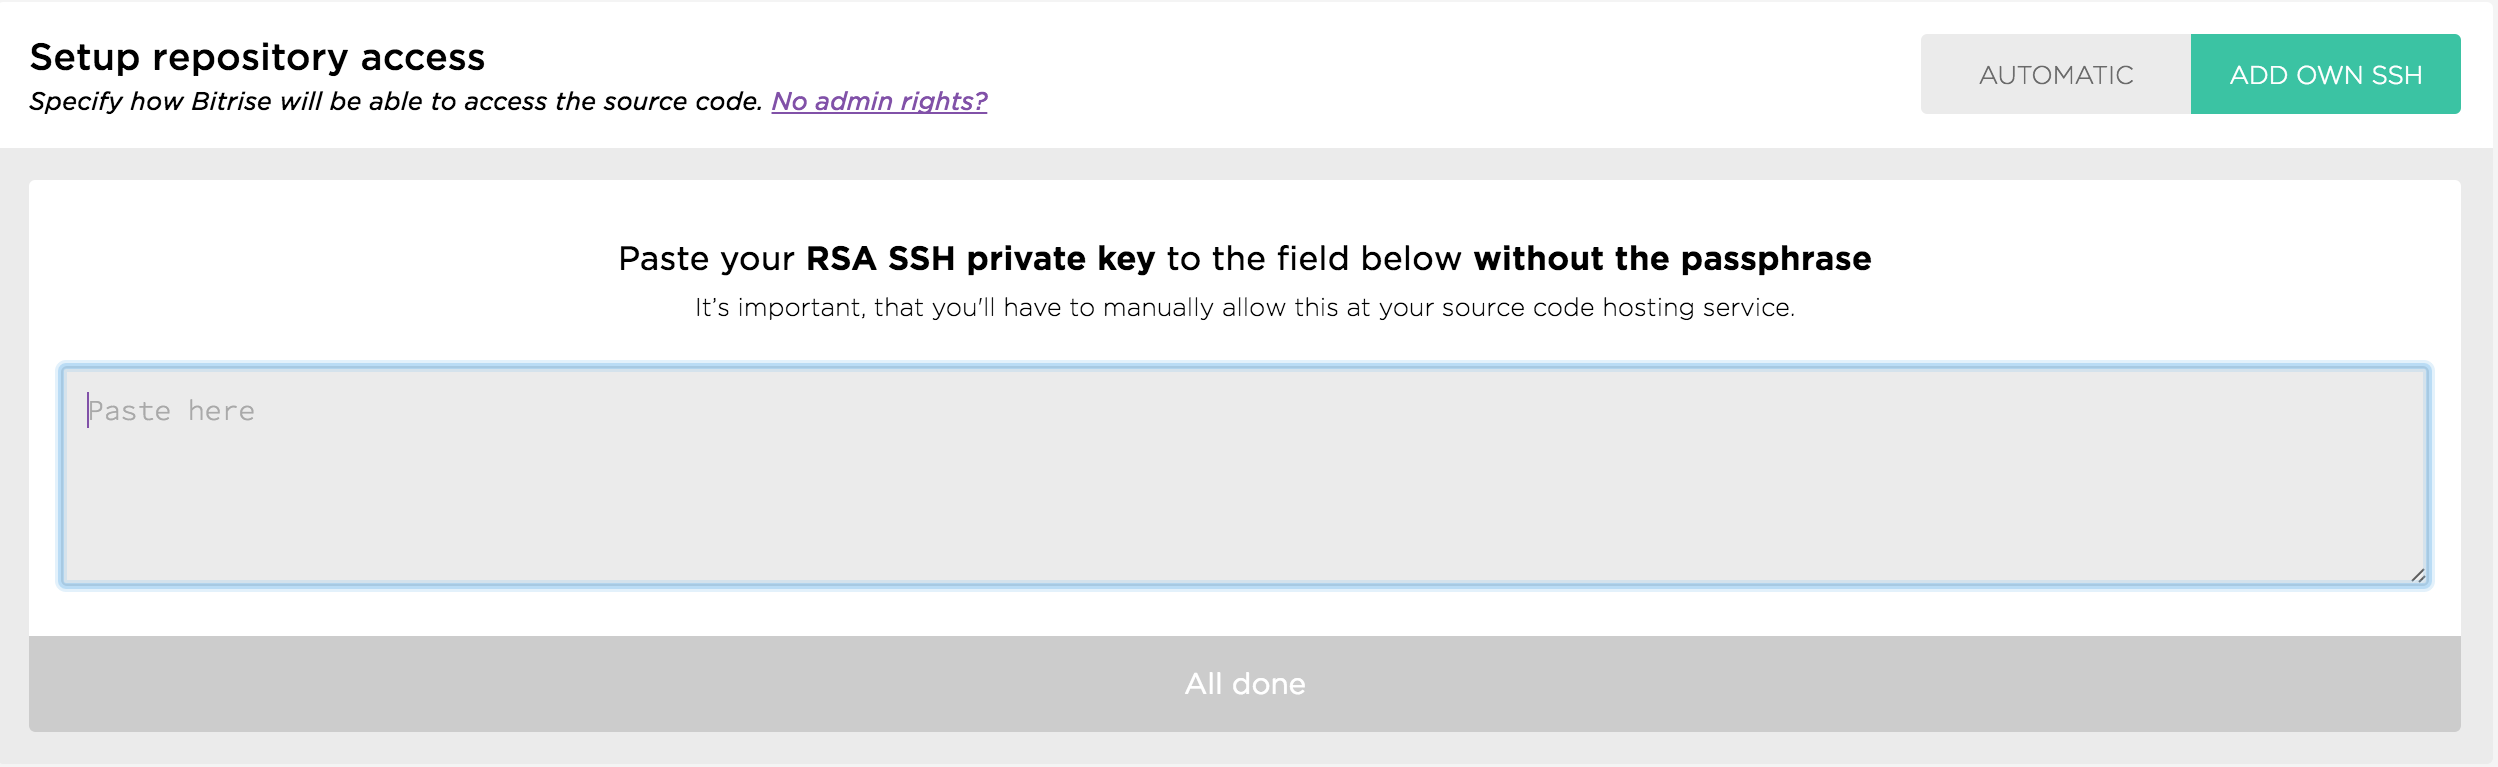 Setting SSH private key in Bitrise